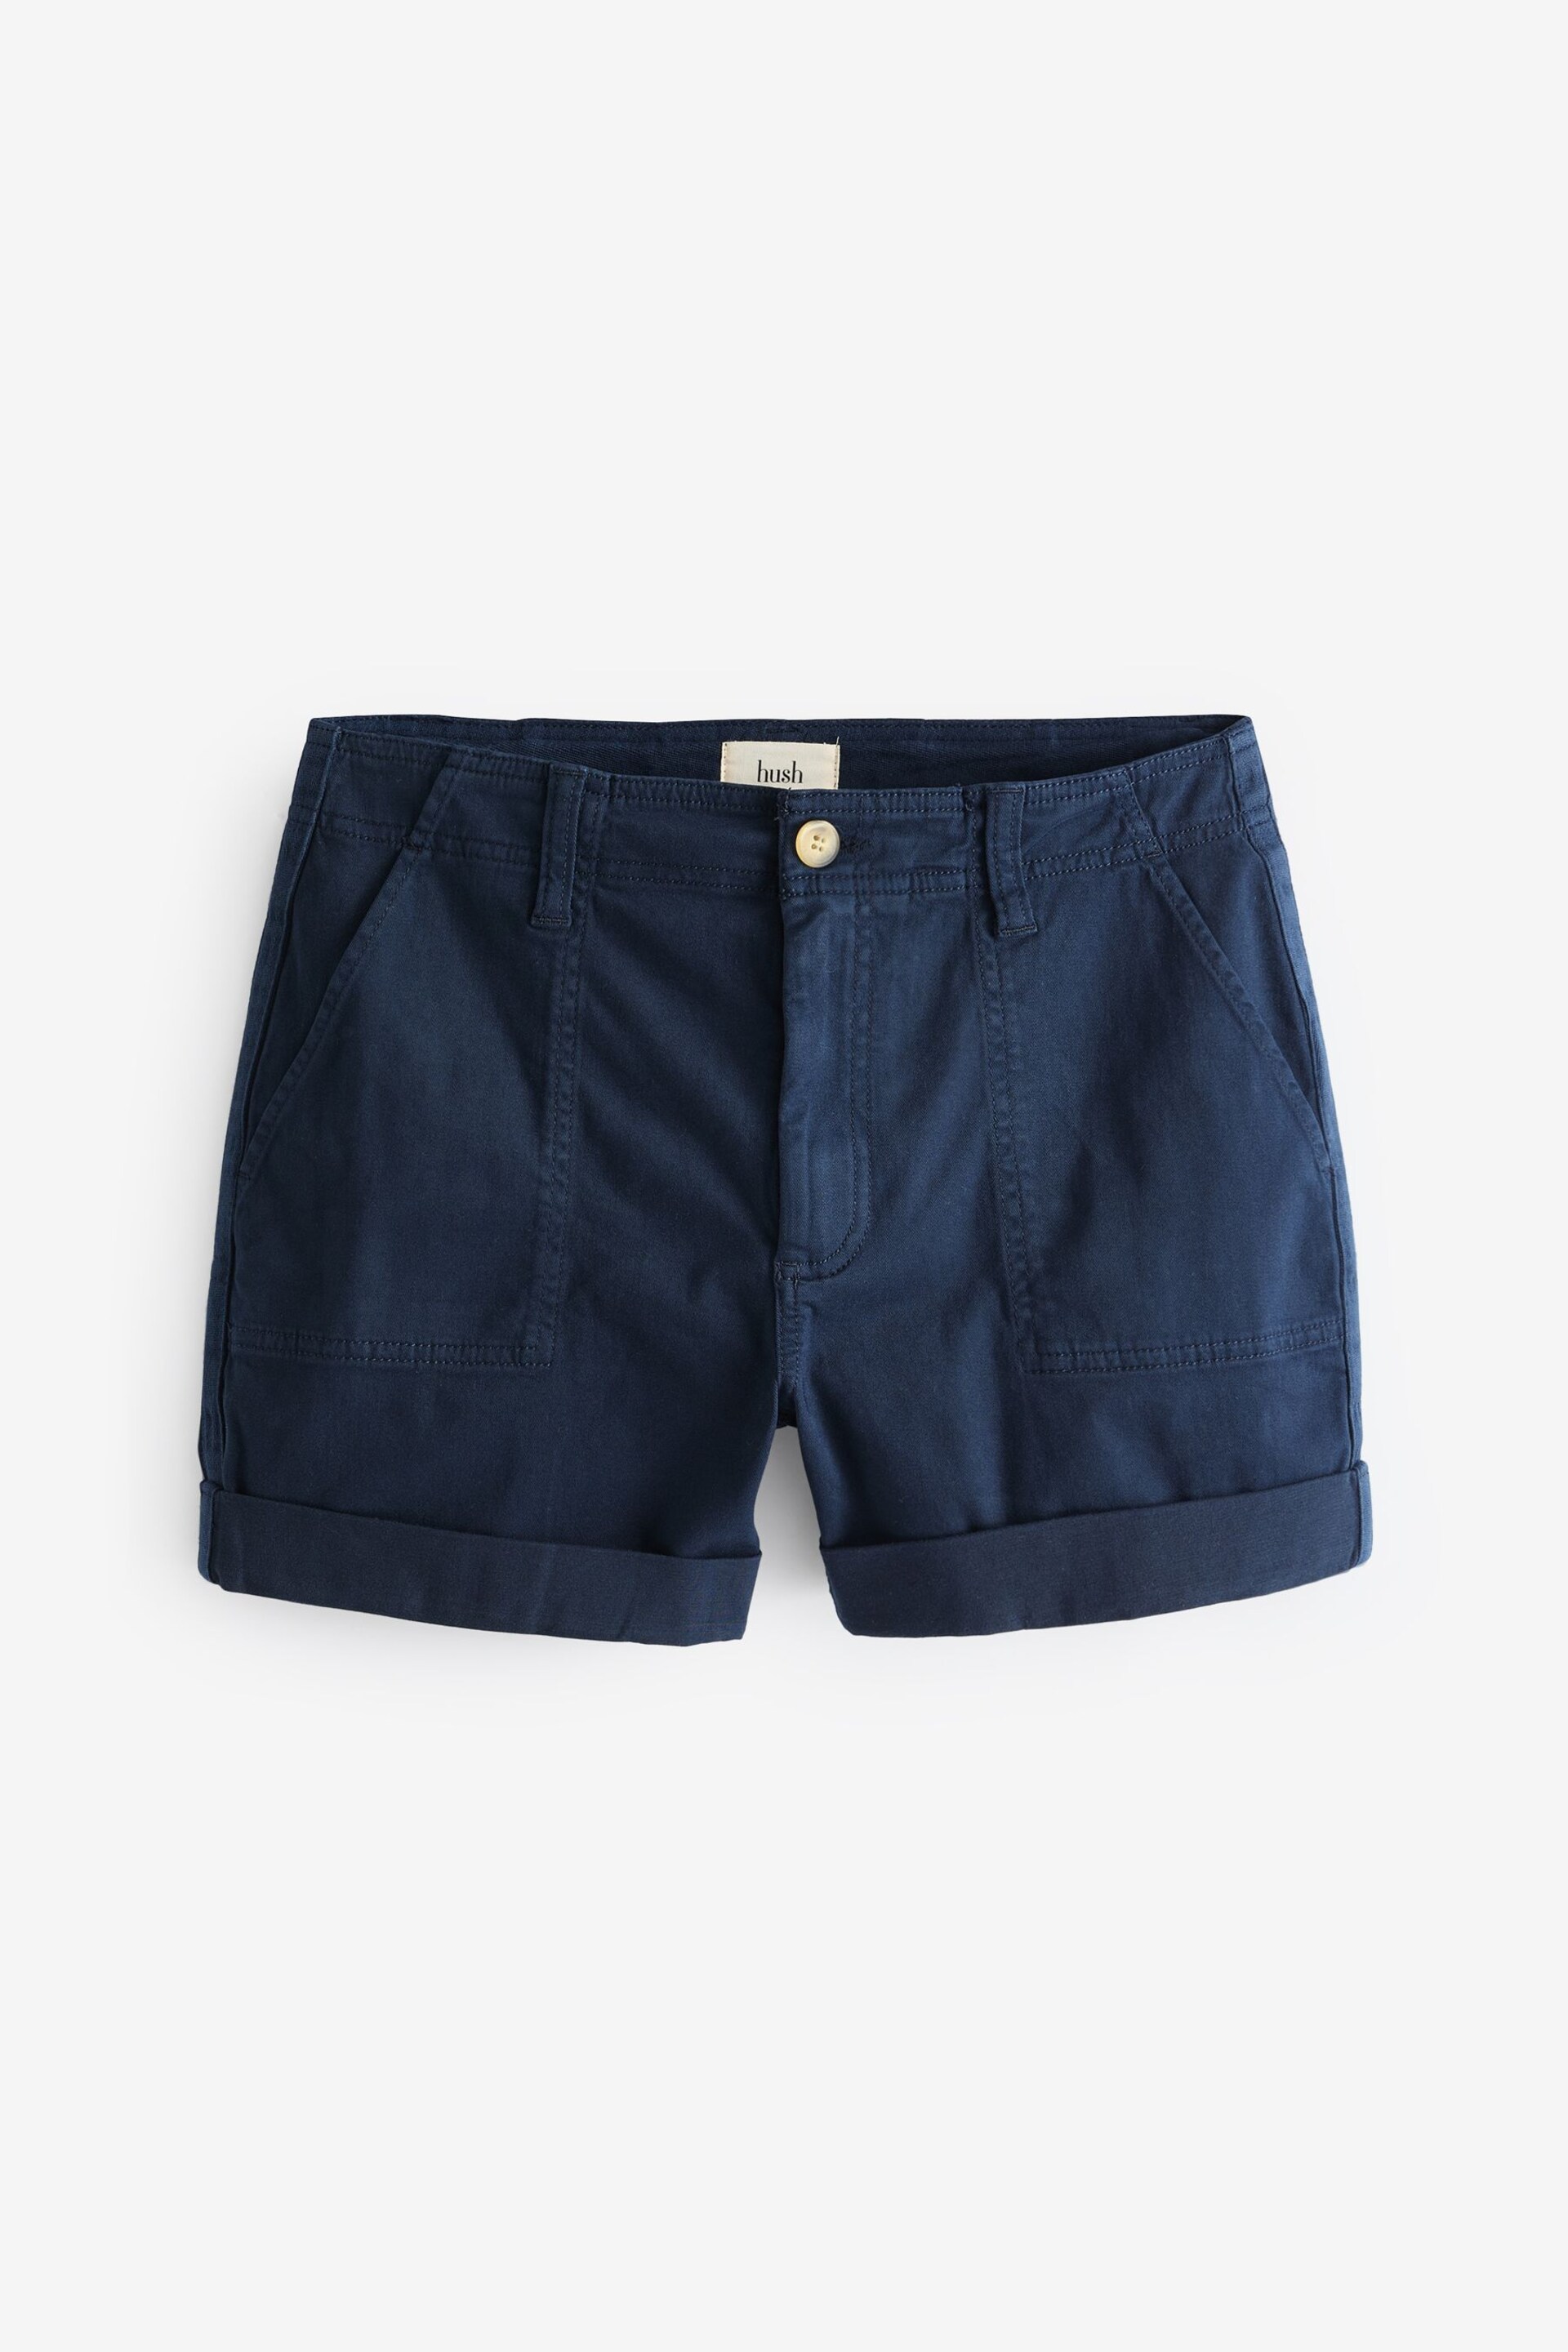 Hush Blue Chino Shorts - Image 5 of 5